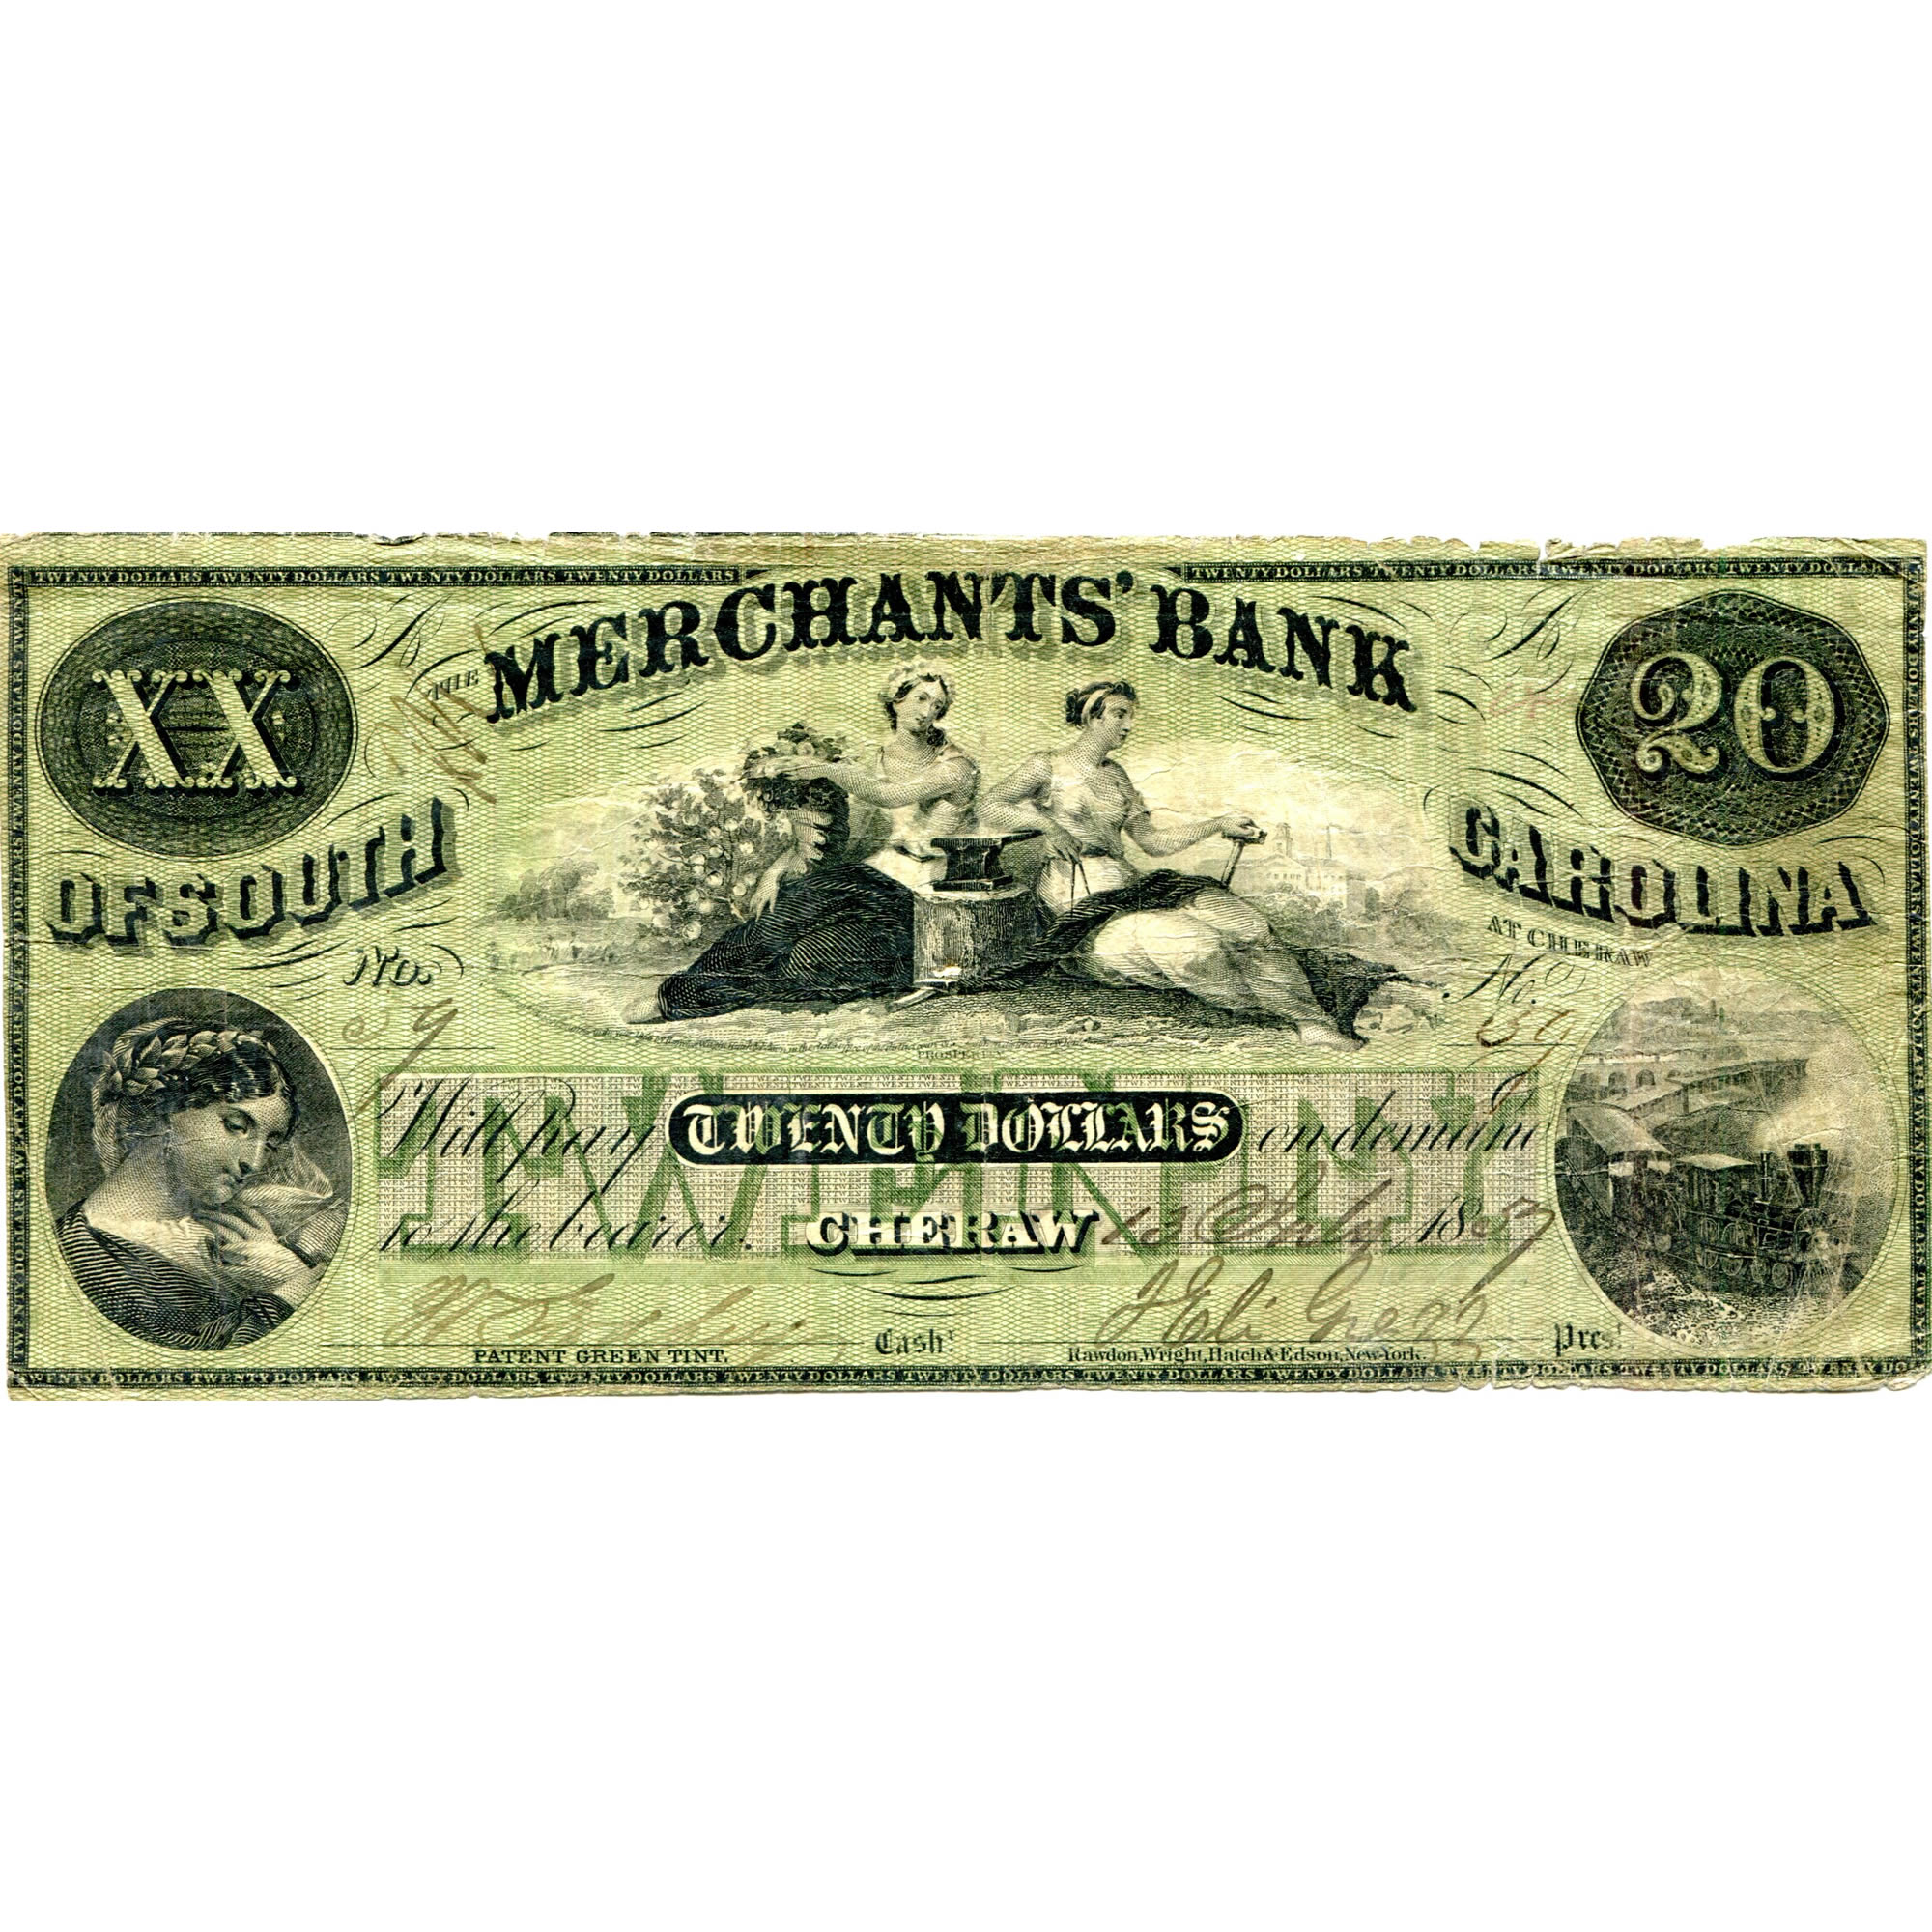 South Carolina Cheraw 1857 $20 Merchants Bank of South Carolina SC-60 G16a Fine